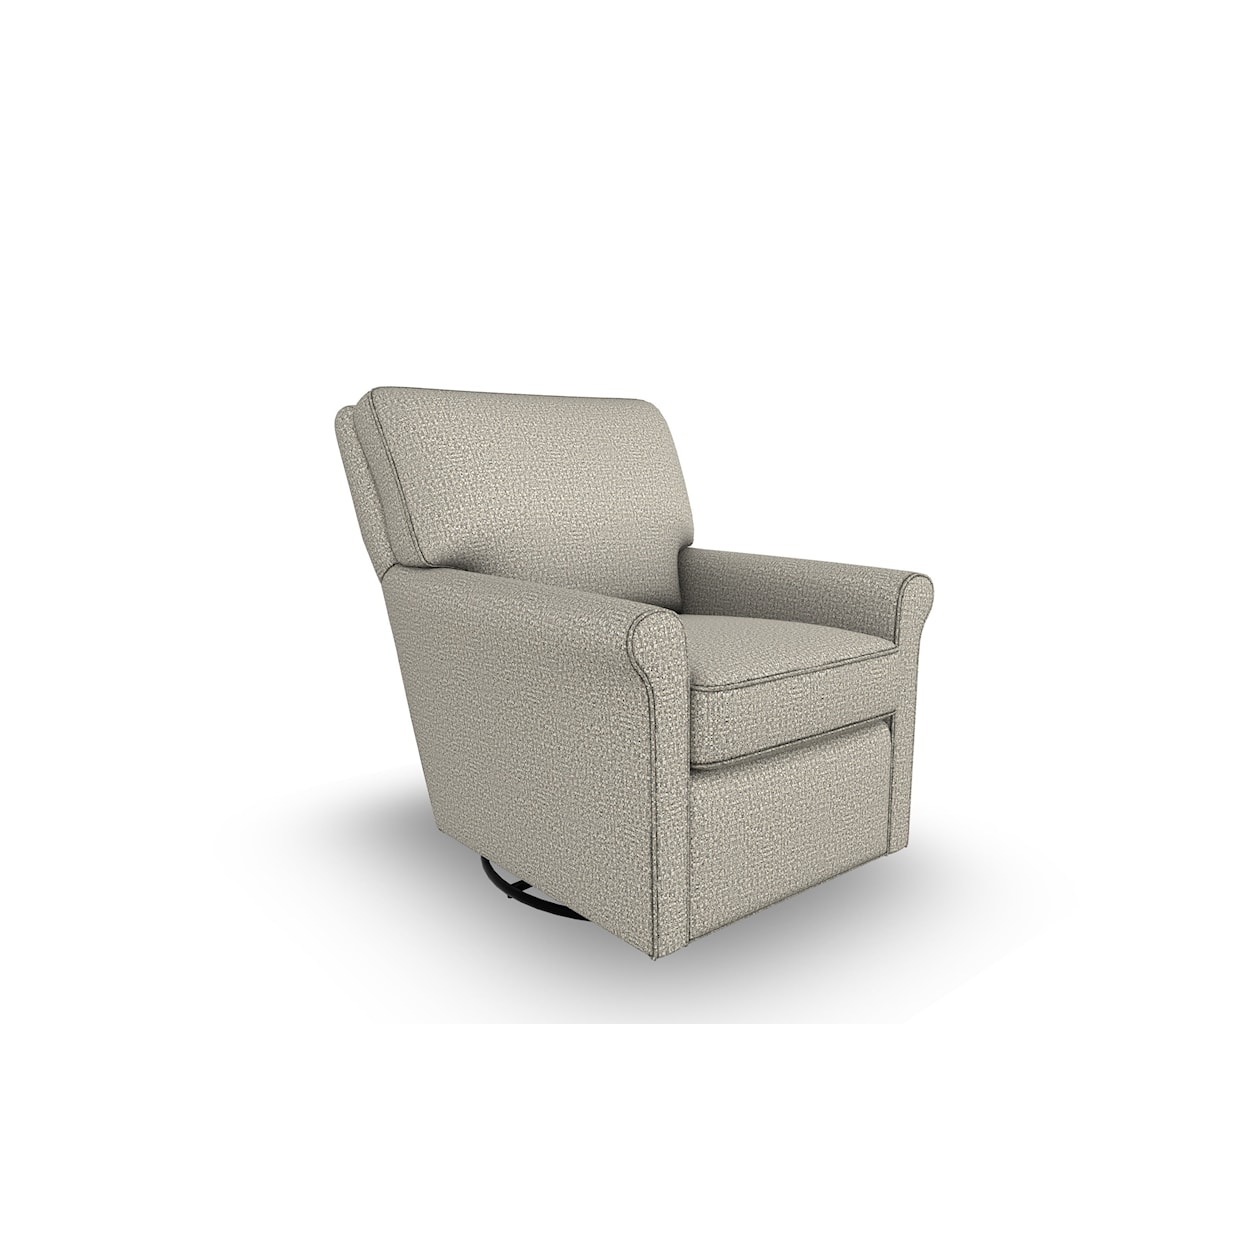 Bravo Furniture Kacey Swivel Glider Chair